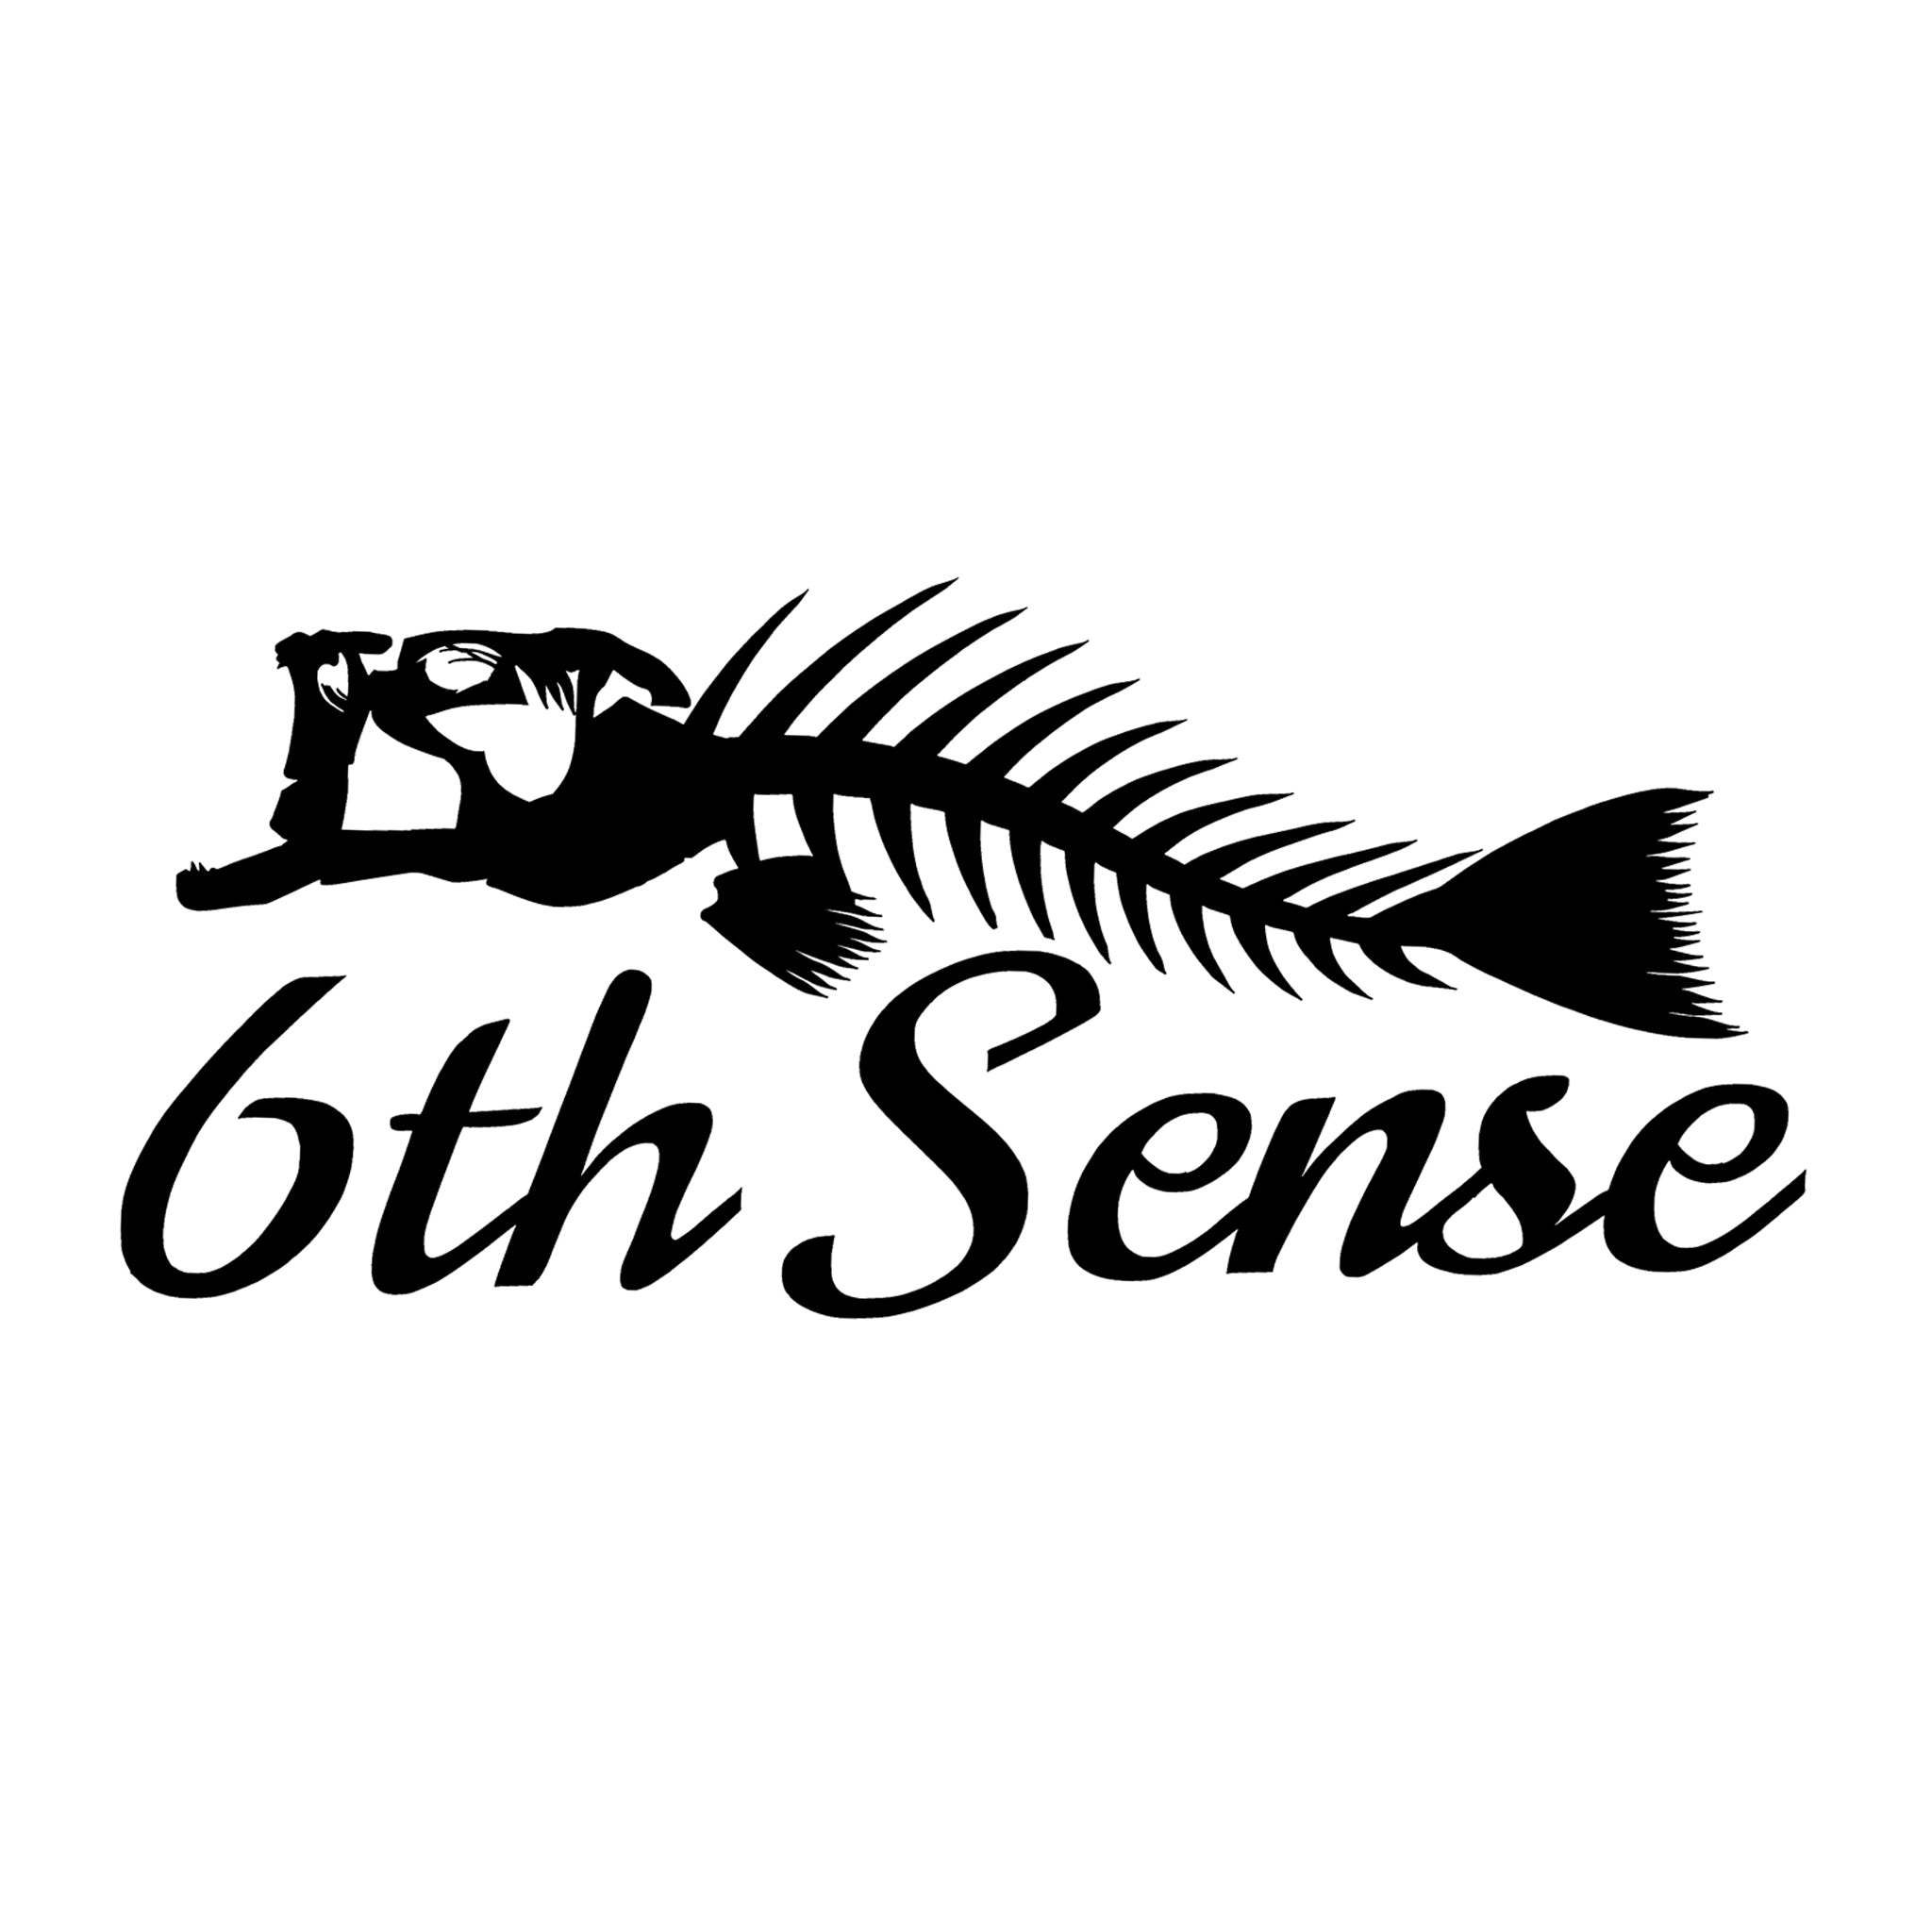 6th Sense Fishing - Gear - 'Fish Bones' Decal